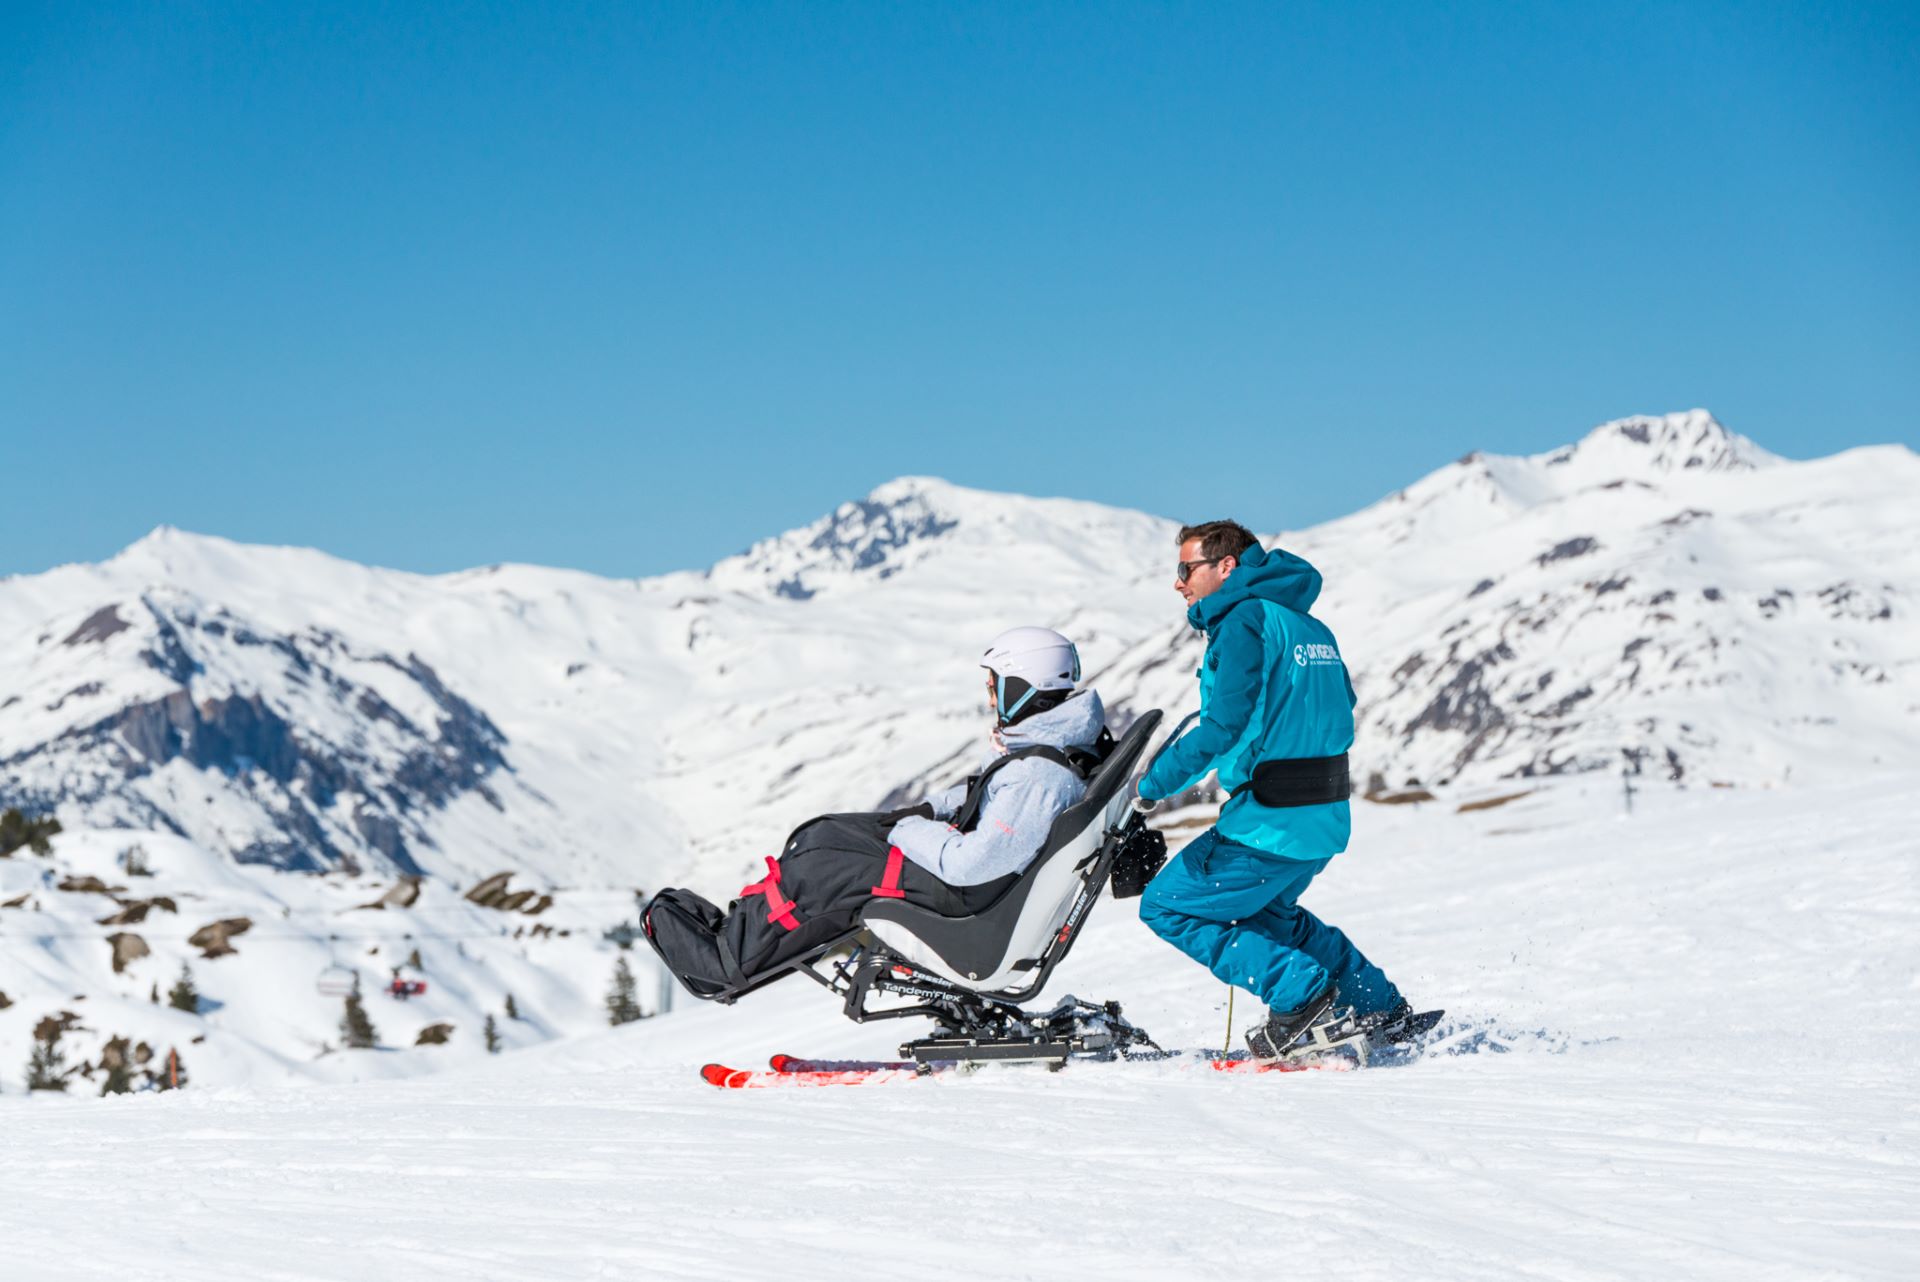 tandem-ski-cours-ski-siege-handiski-station-montagne-oxygene-ski-collection